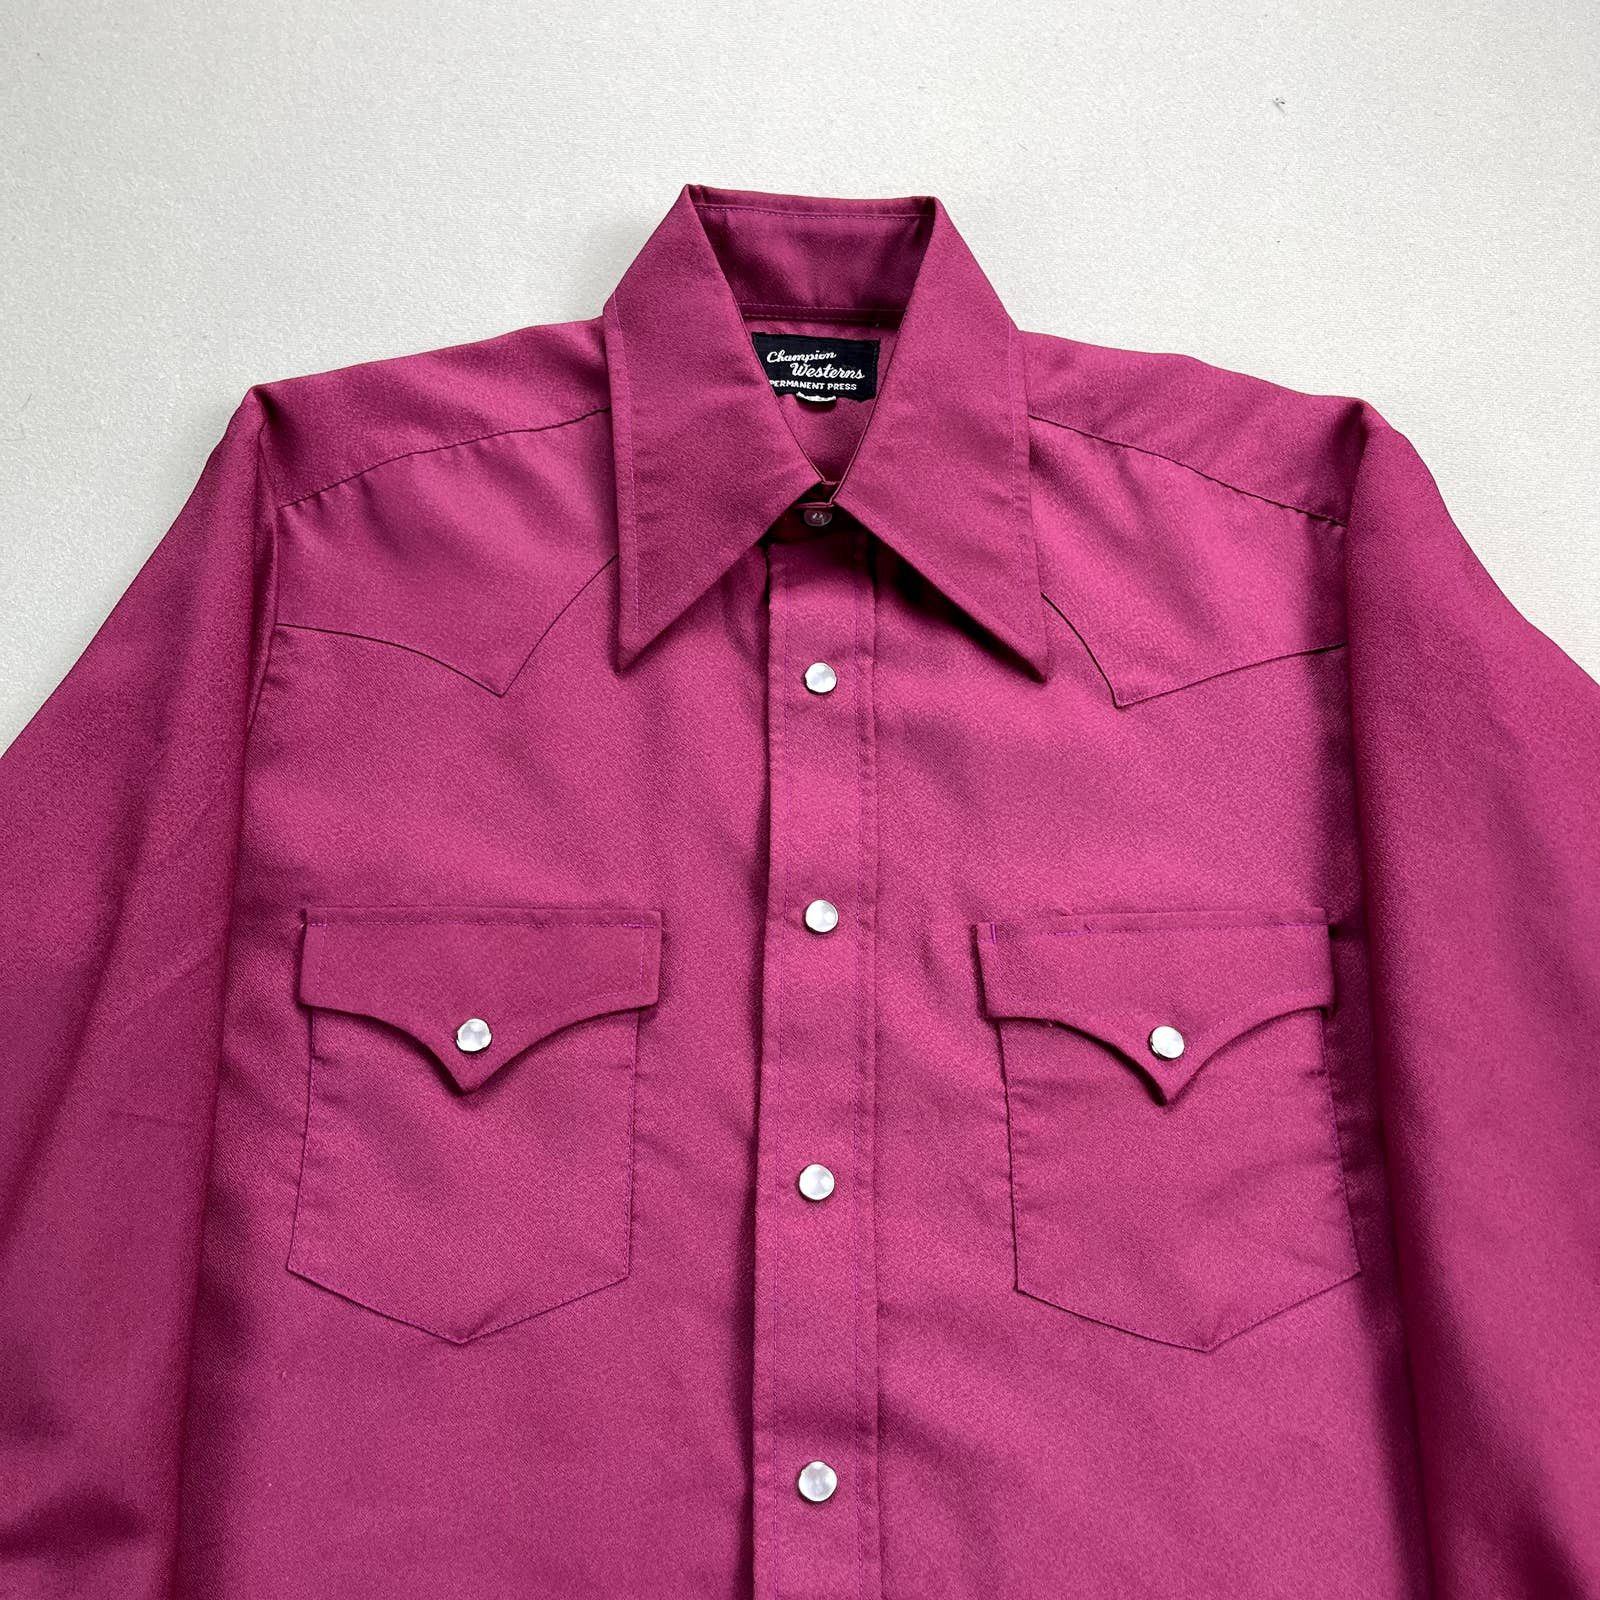 Vintage Vintage Champion Westerns Shirt Medium 15-33 Pink Pearl Snap Size US M / EU 48-50 / 2 - 2 Preview